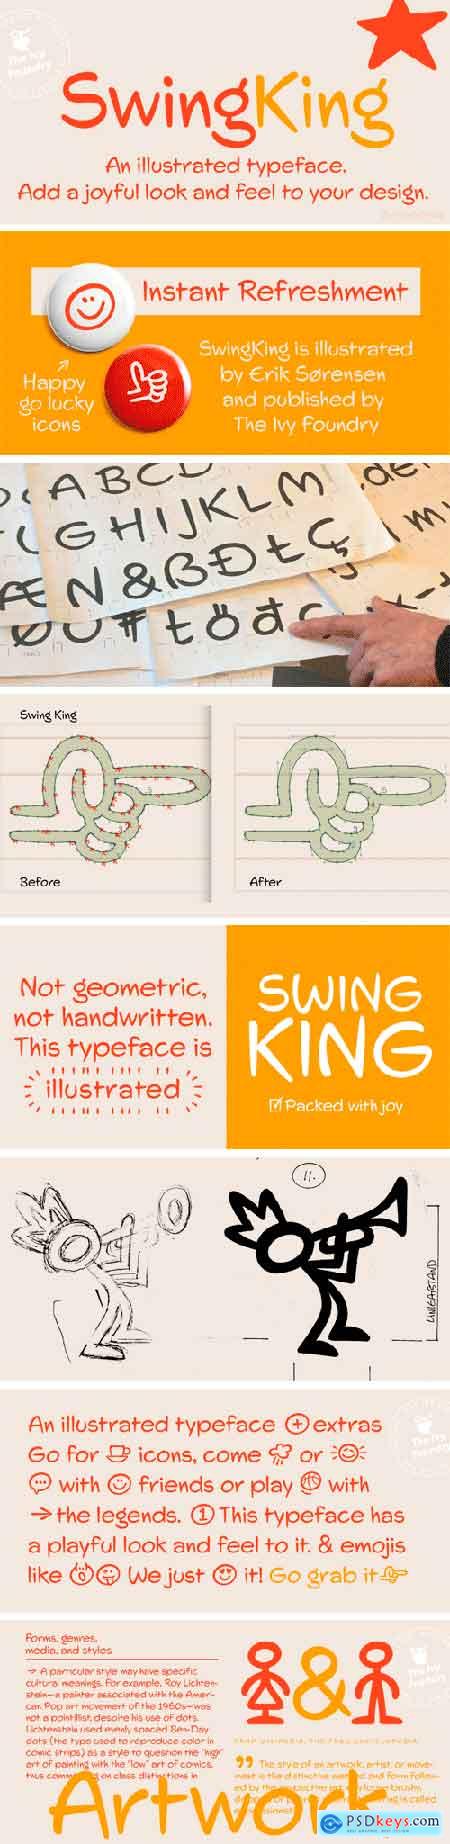 SwingKing Typeface